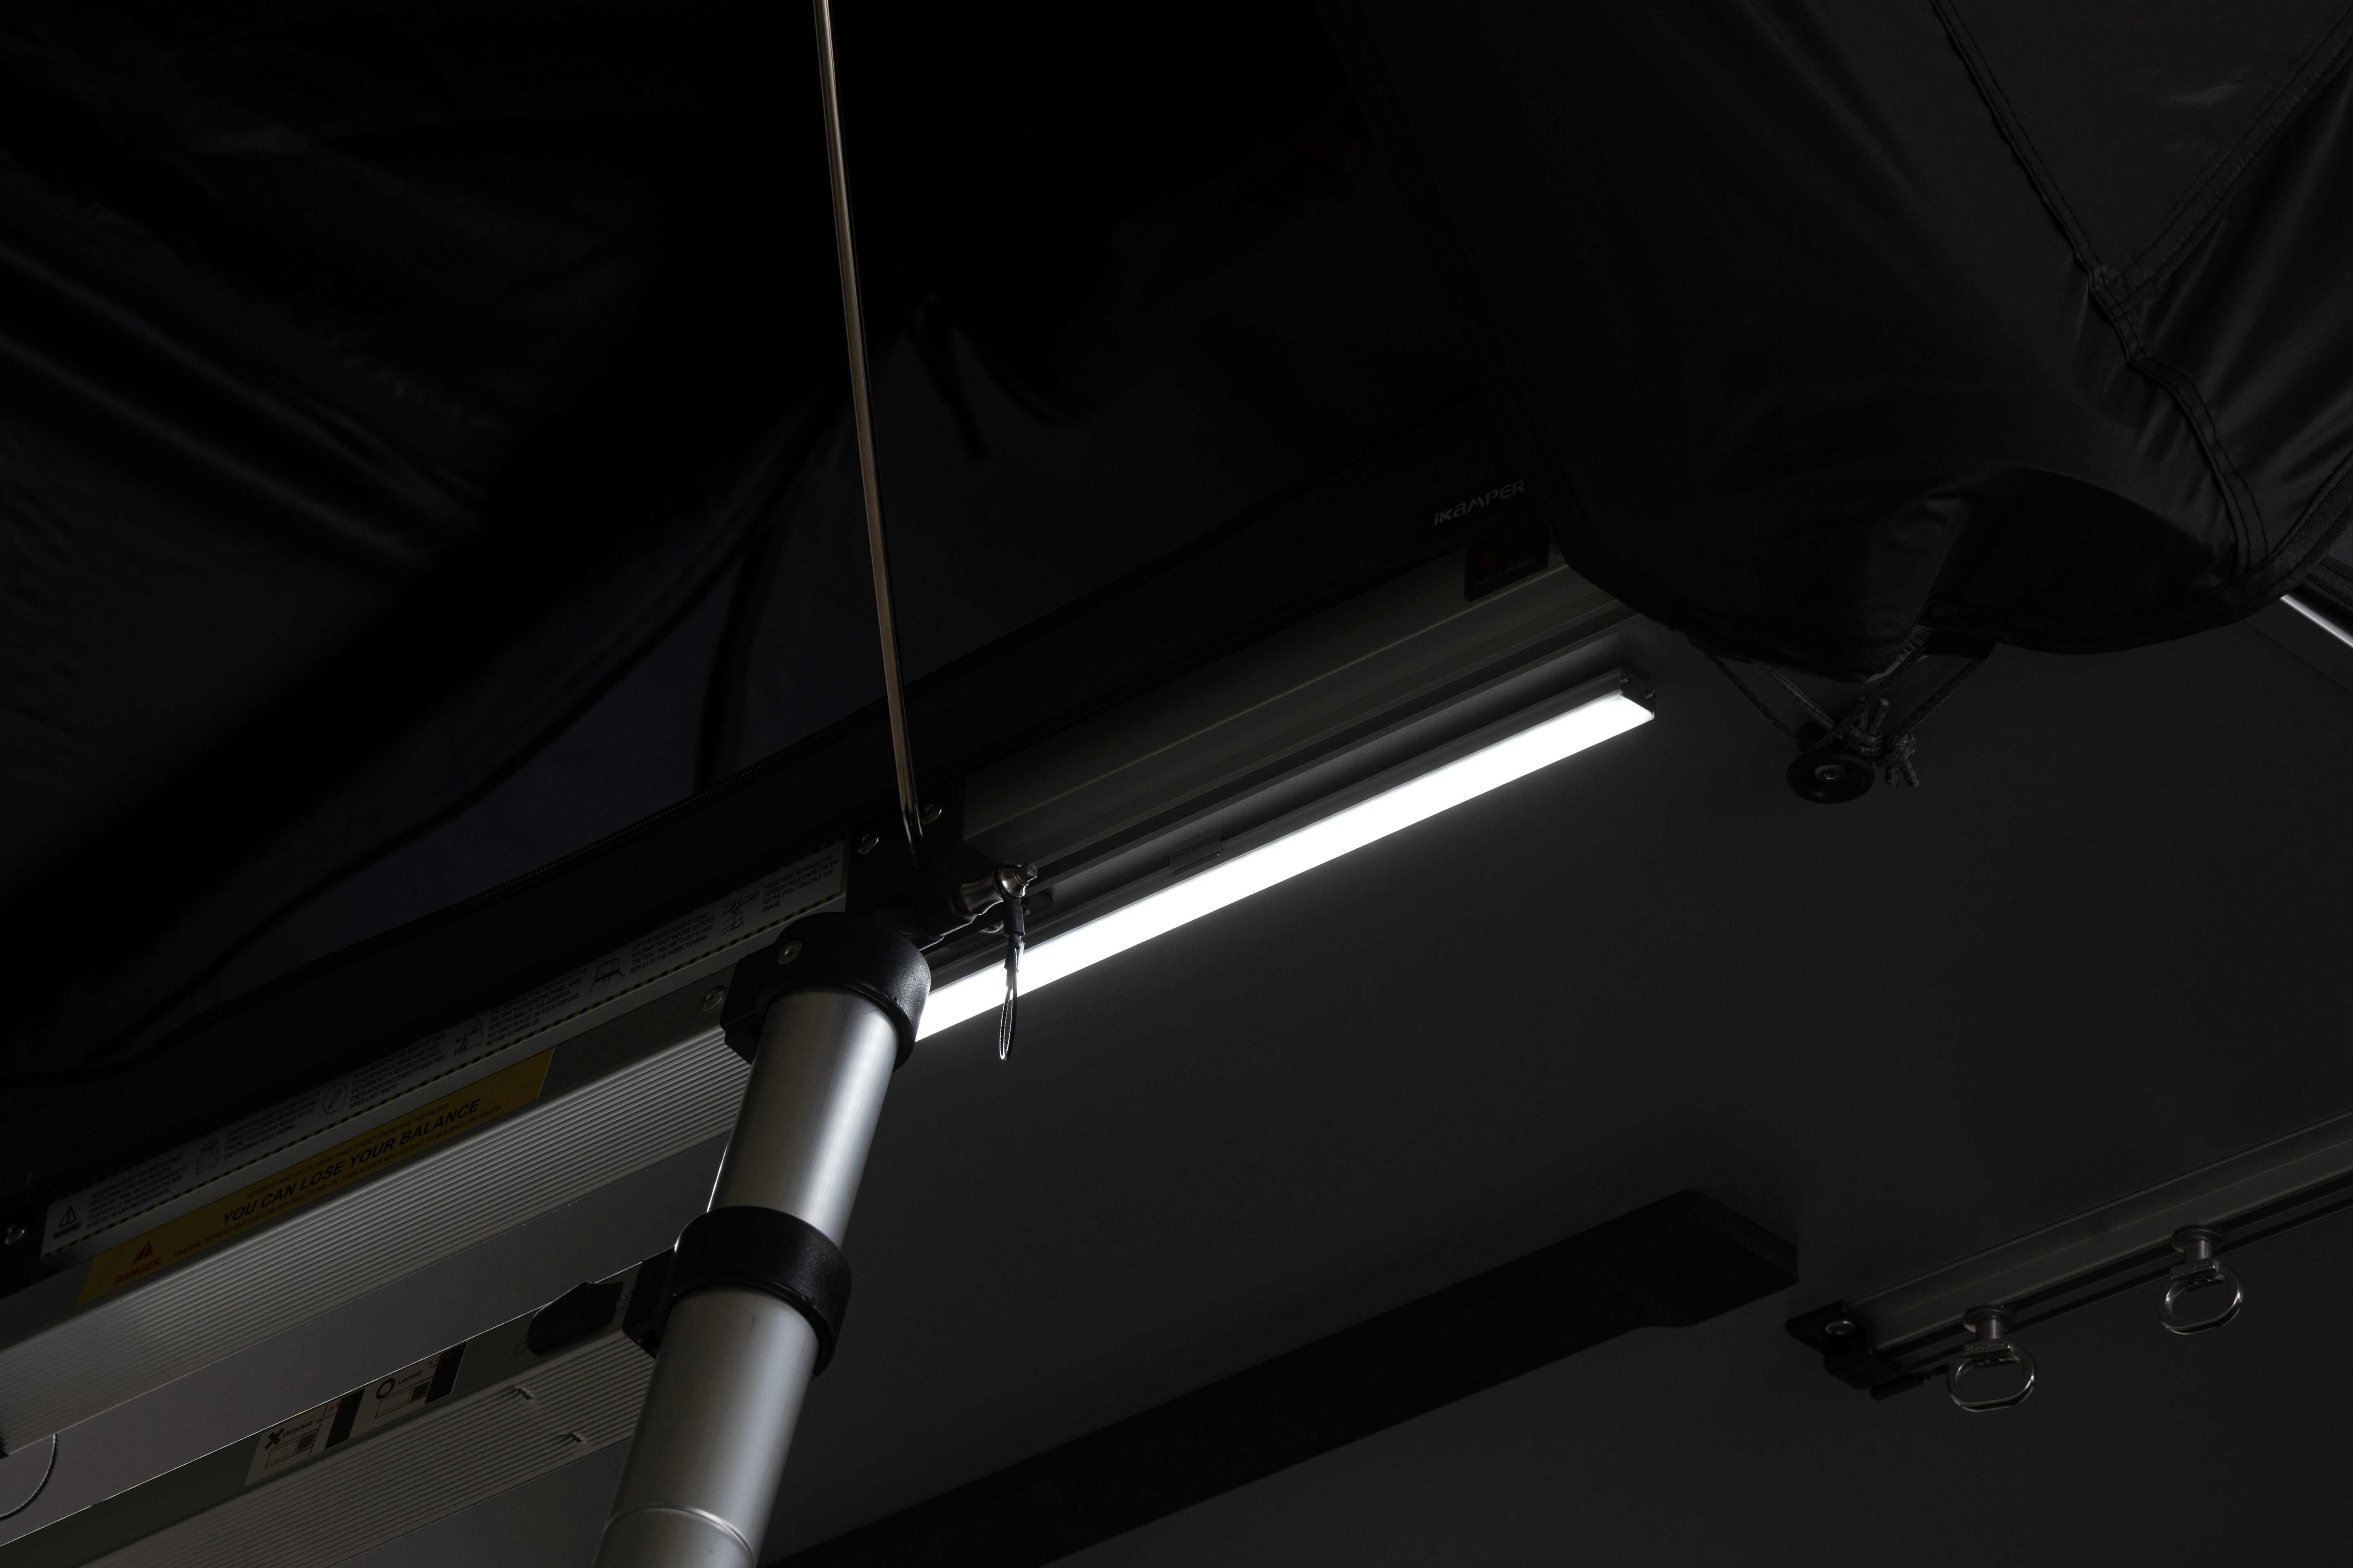 Skycamp DLX's external bar light in white light